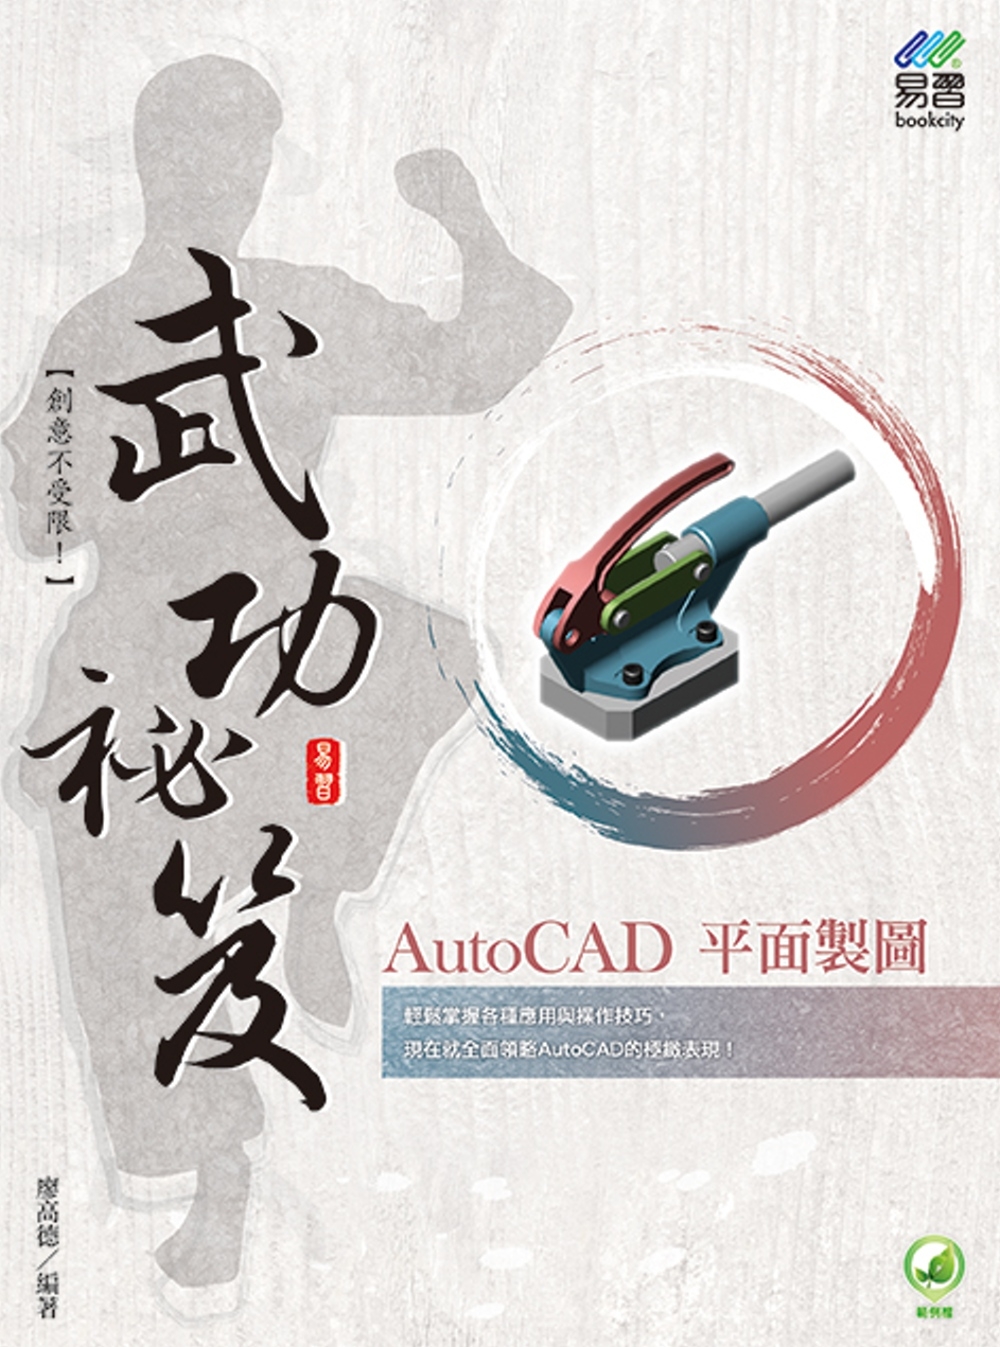 AutoCAD 平面製圖 武功祕笈